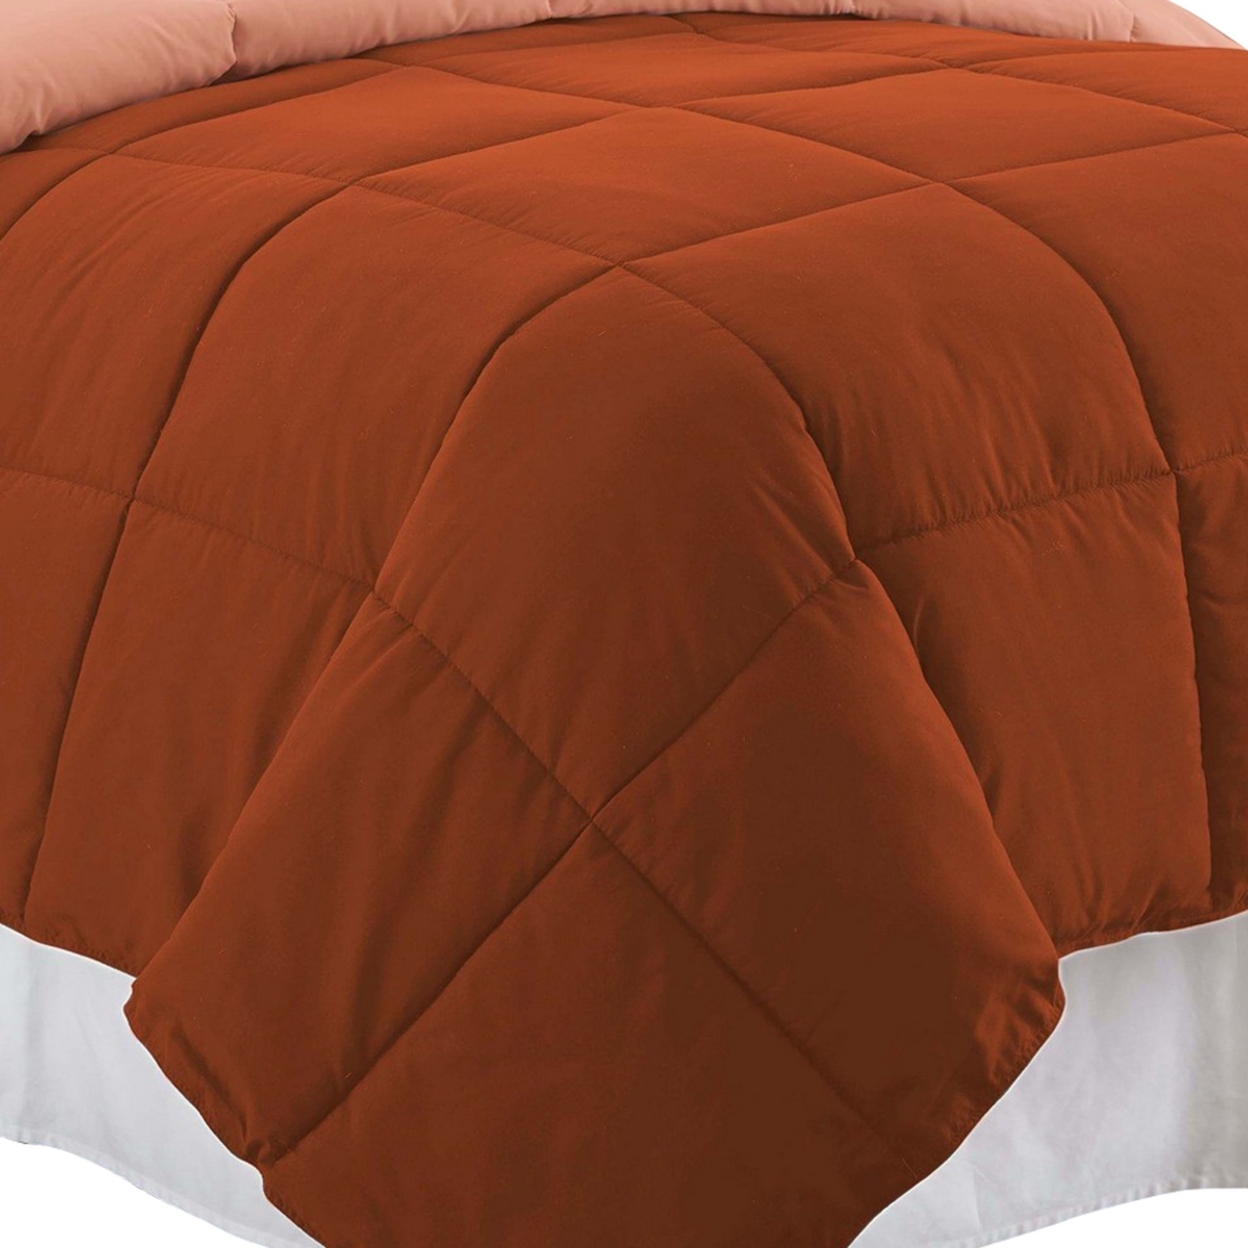 Veria Microfiber King Comforter With Stitched Block Pattern The Urban Port, Brown- Saltoro Sherpi